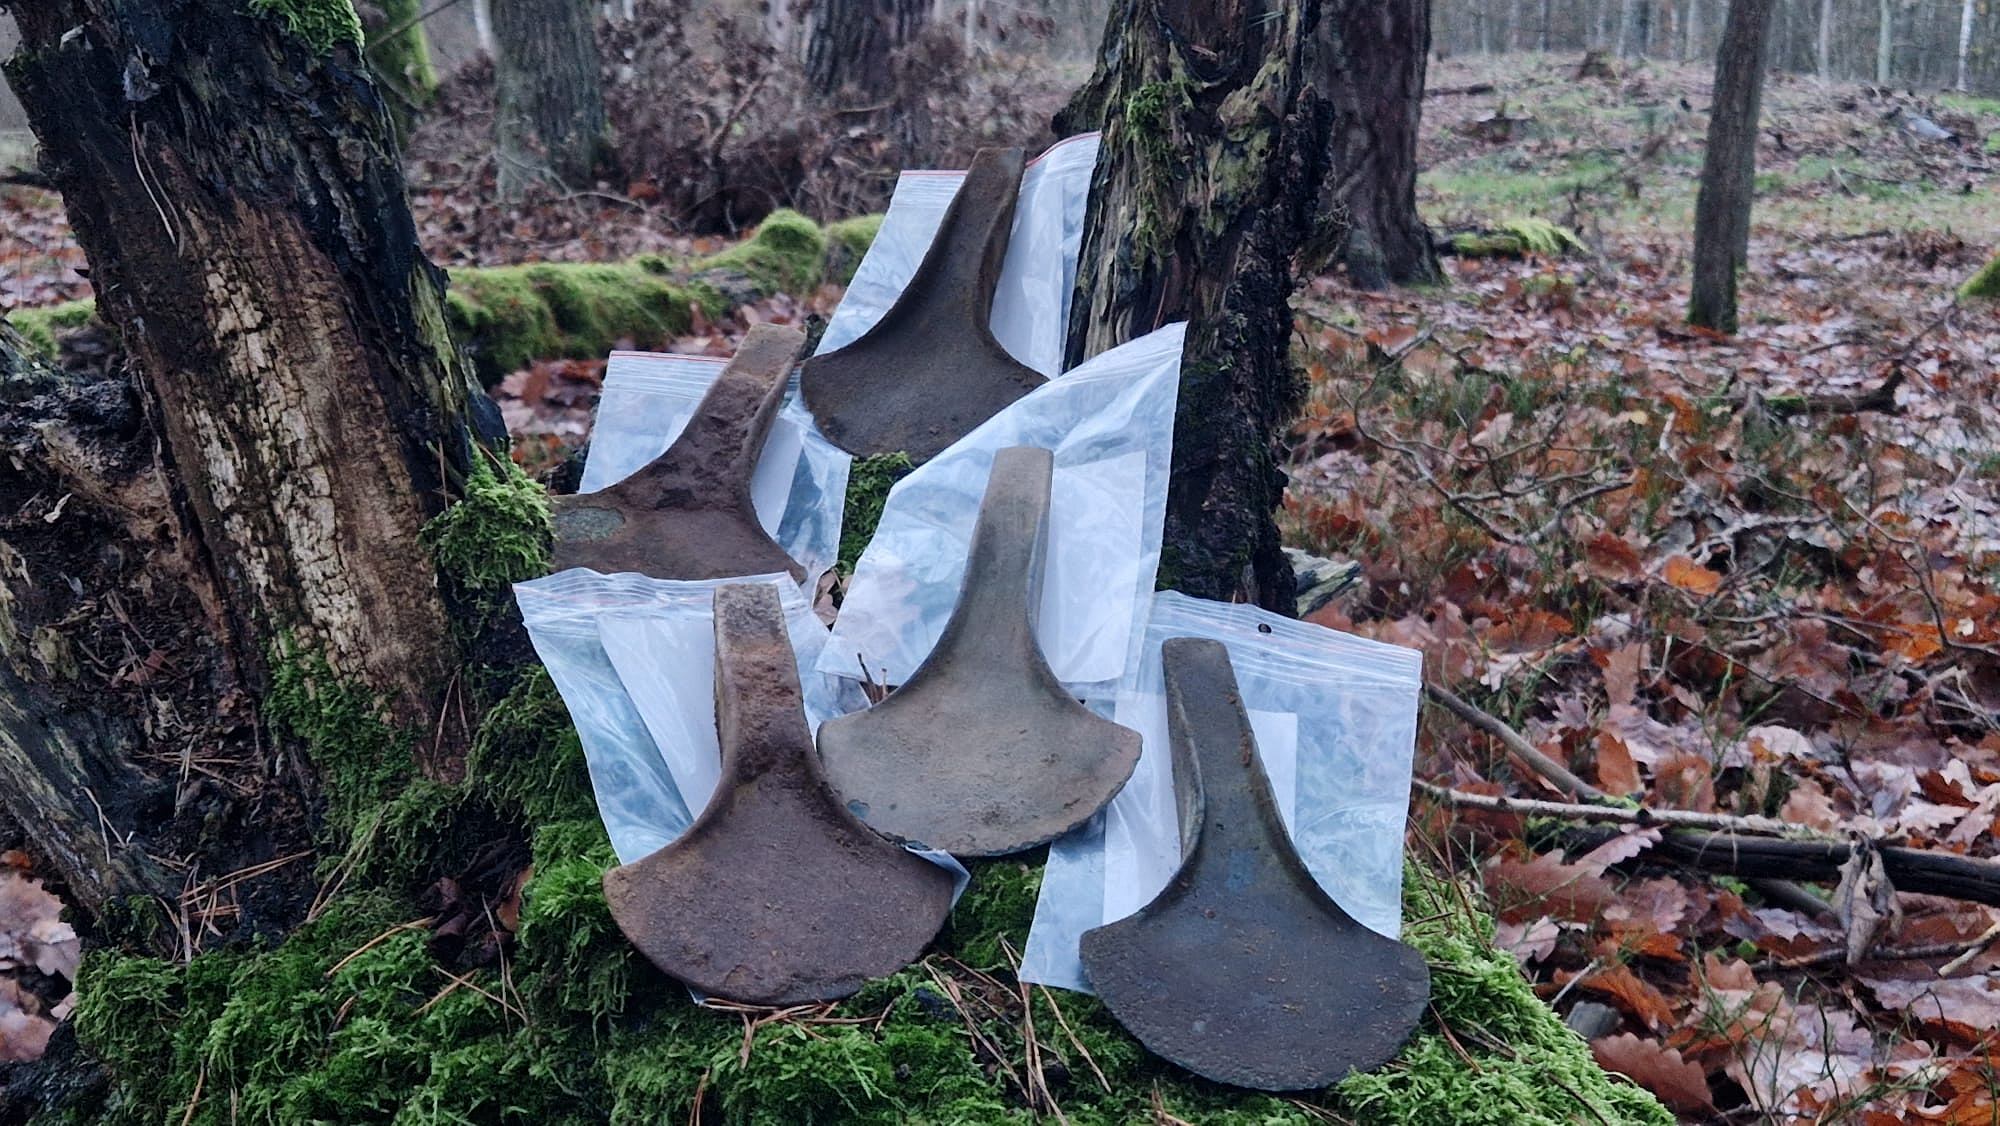 Detectorist discovers unique depot of broad bronze axes